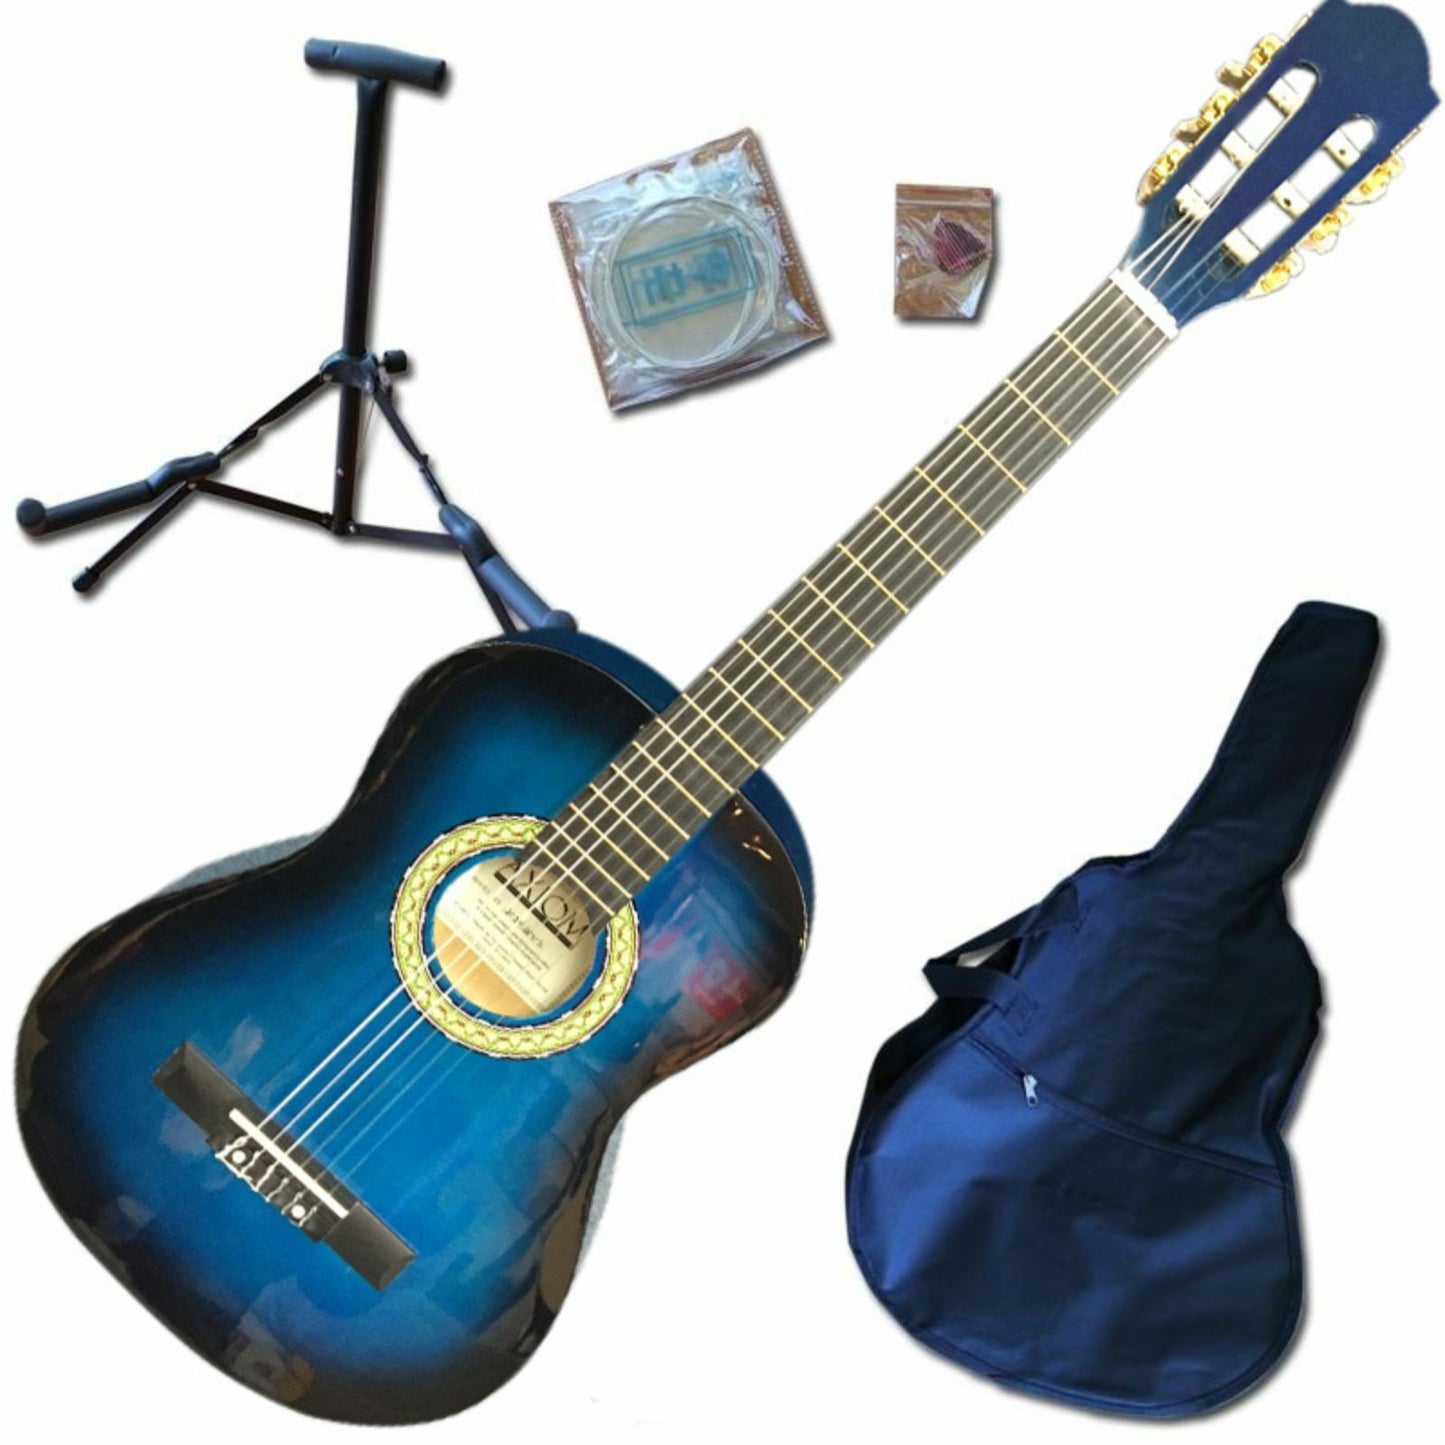 Axiom Beginners Guitar Pack - Full Size Blue